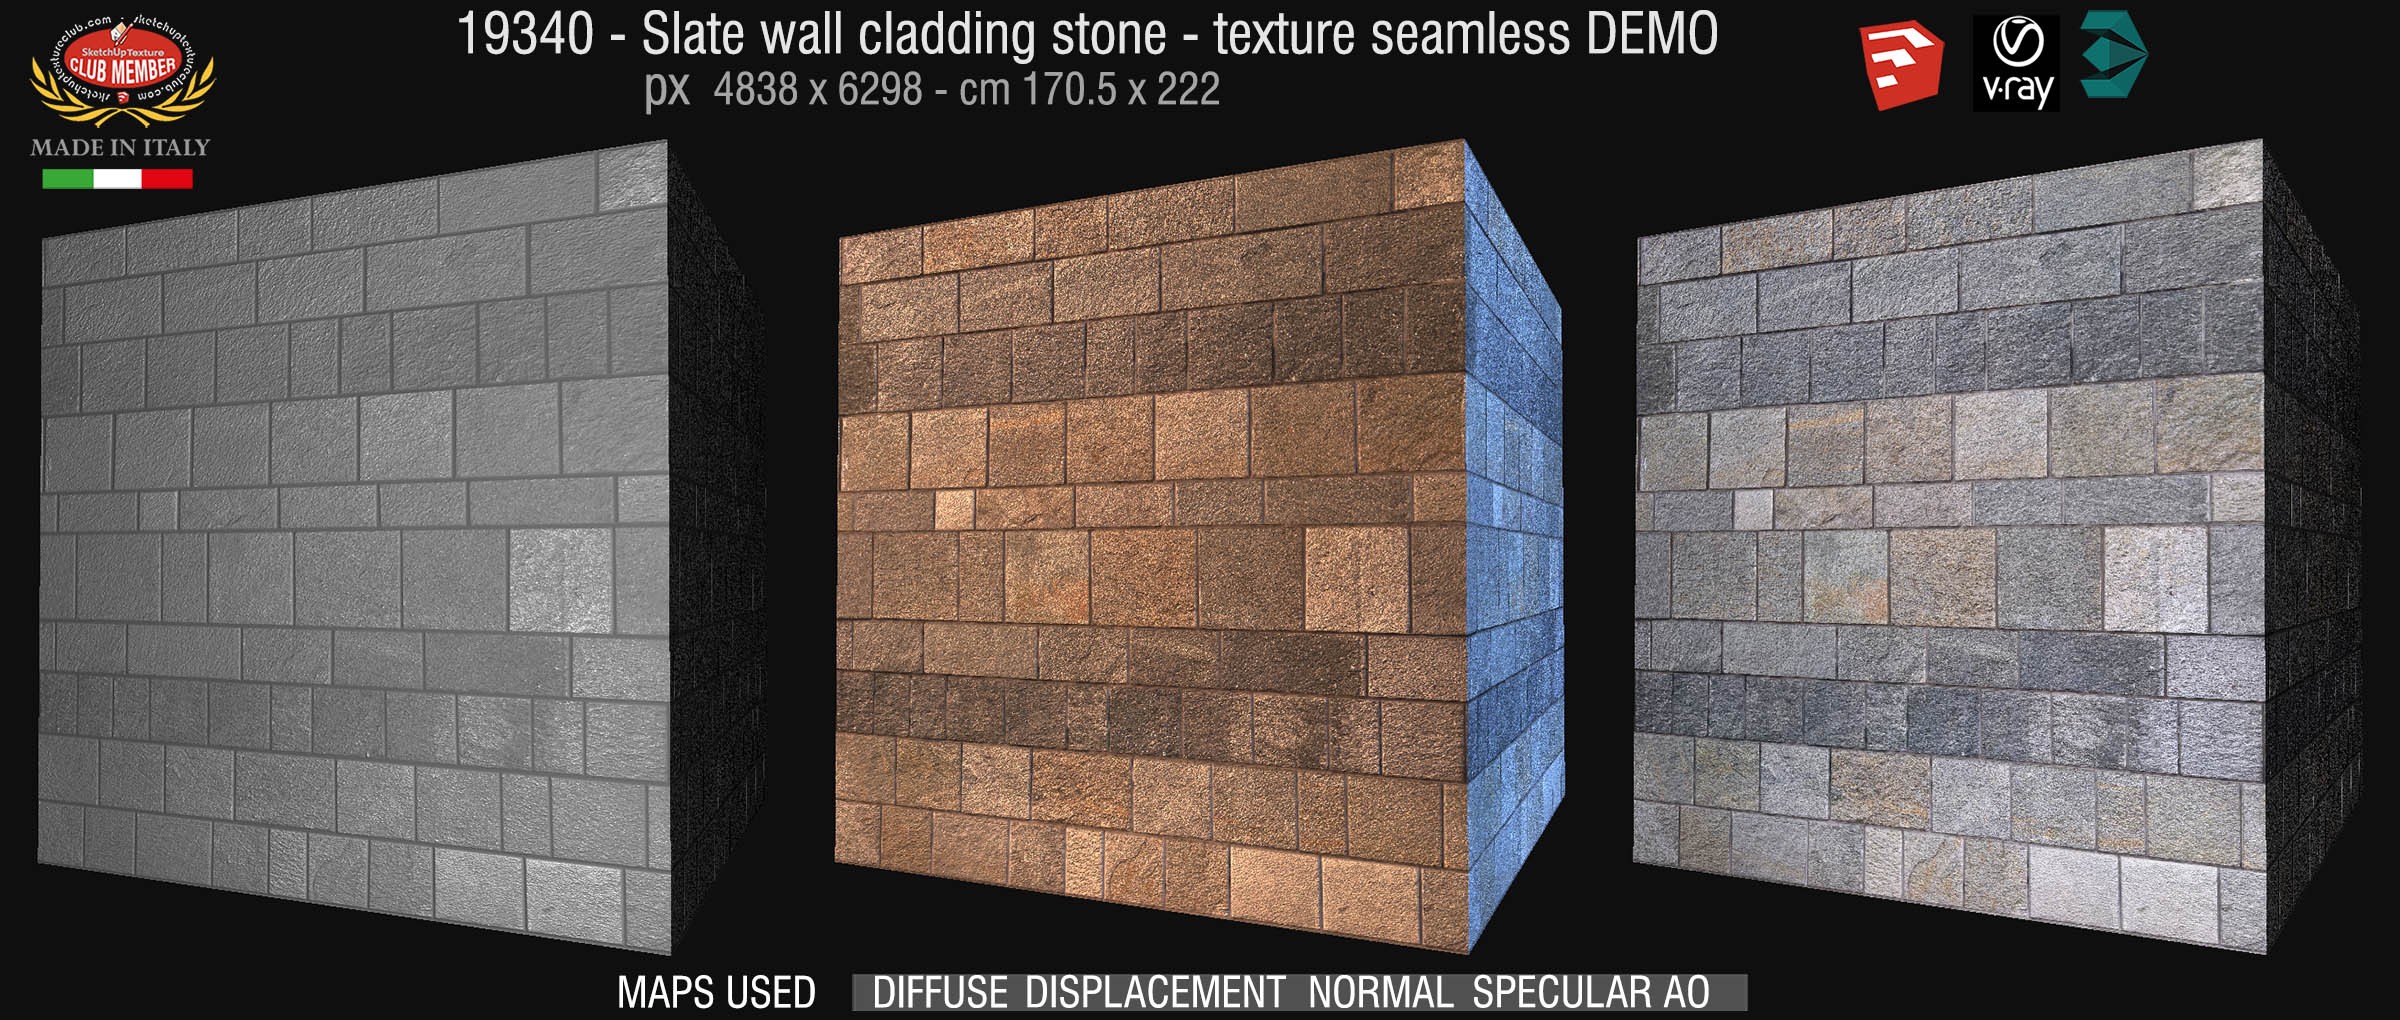 19340 Wall cladding stone texture seamless + maps DEMO